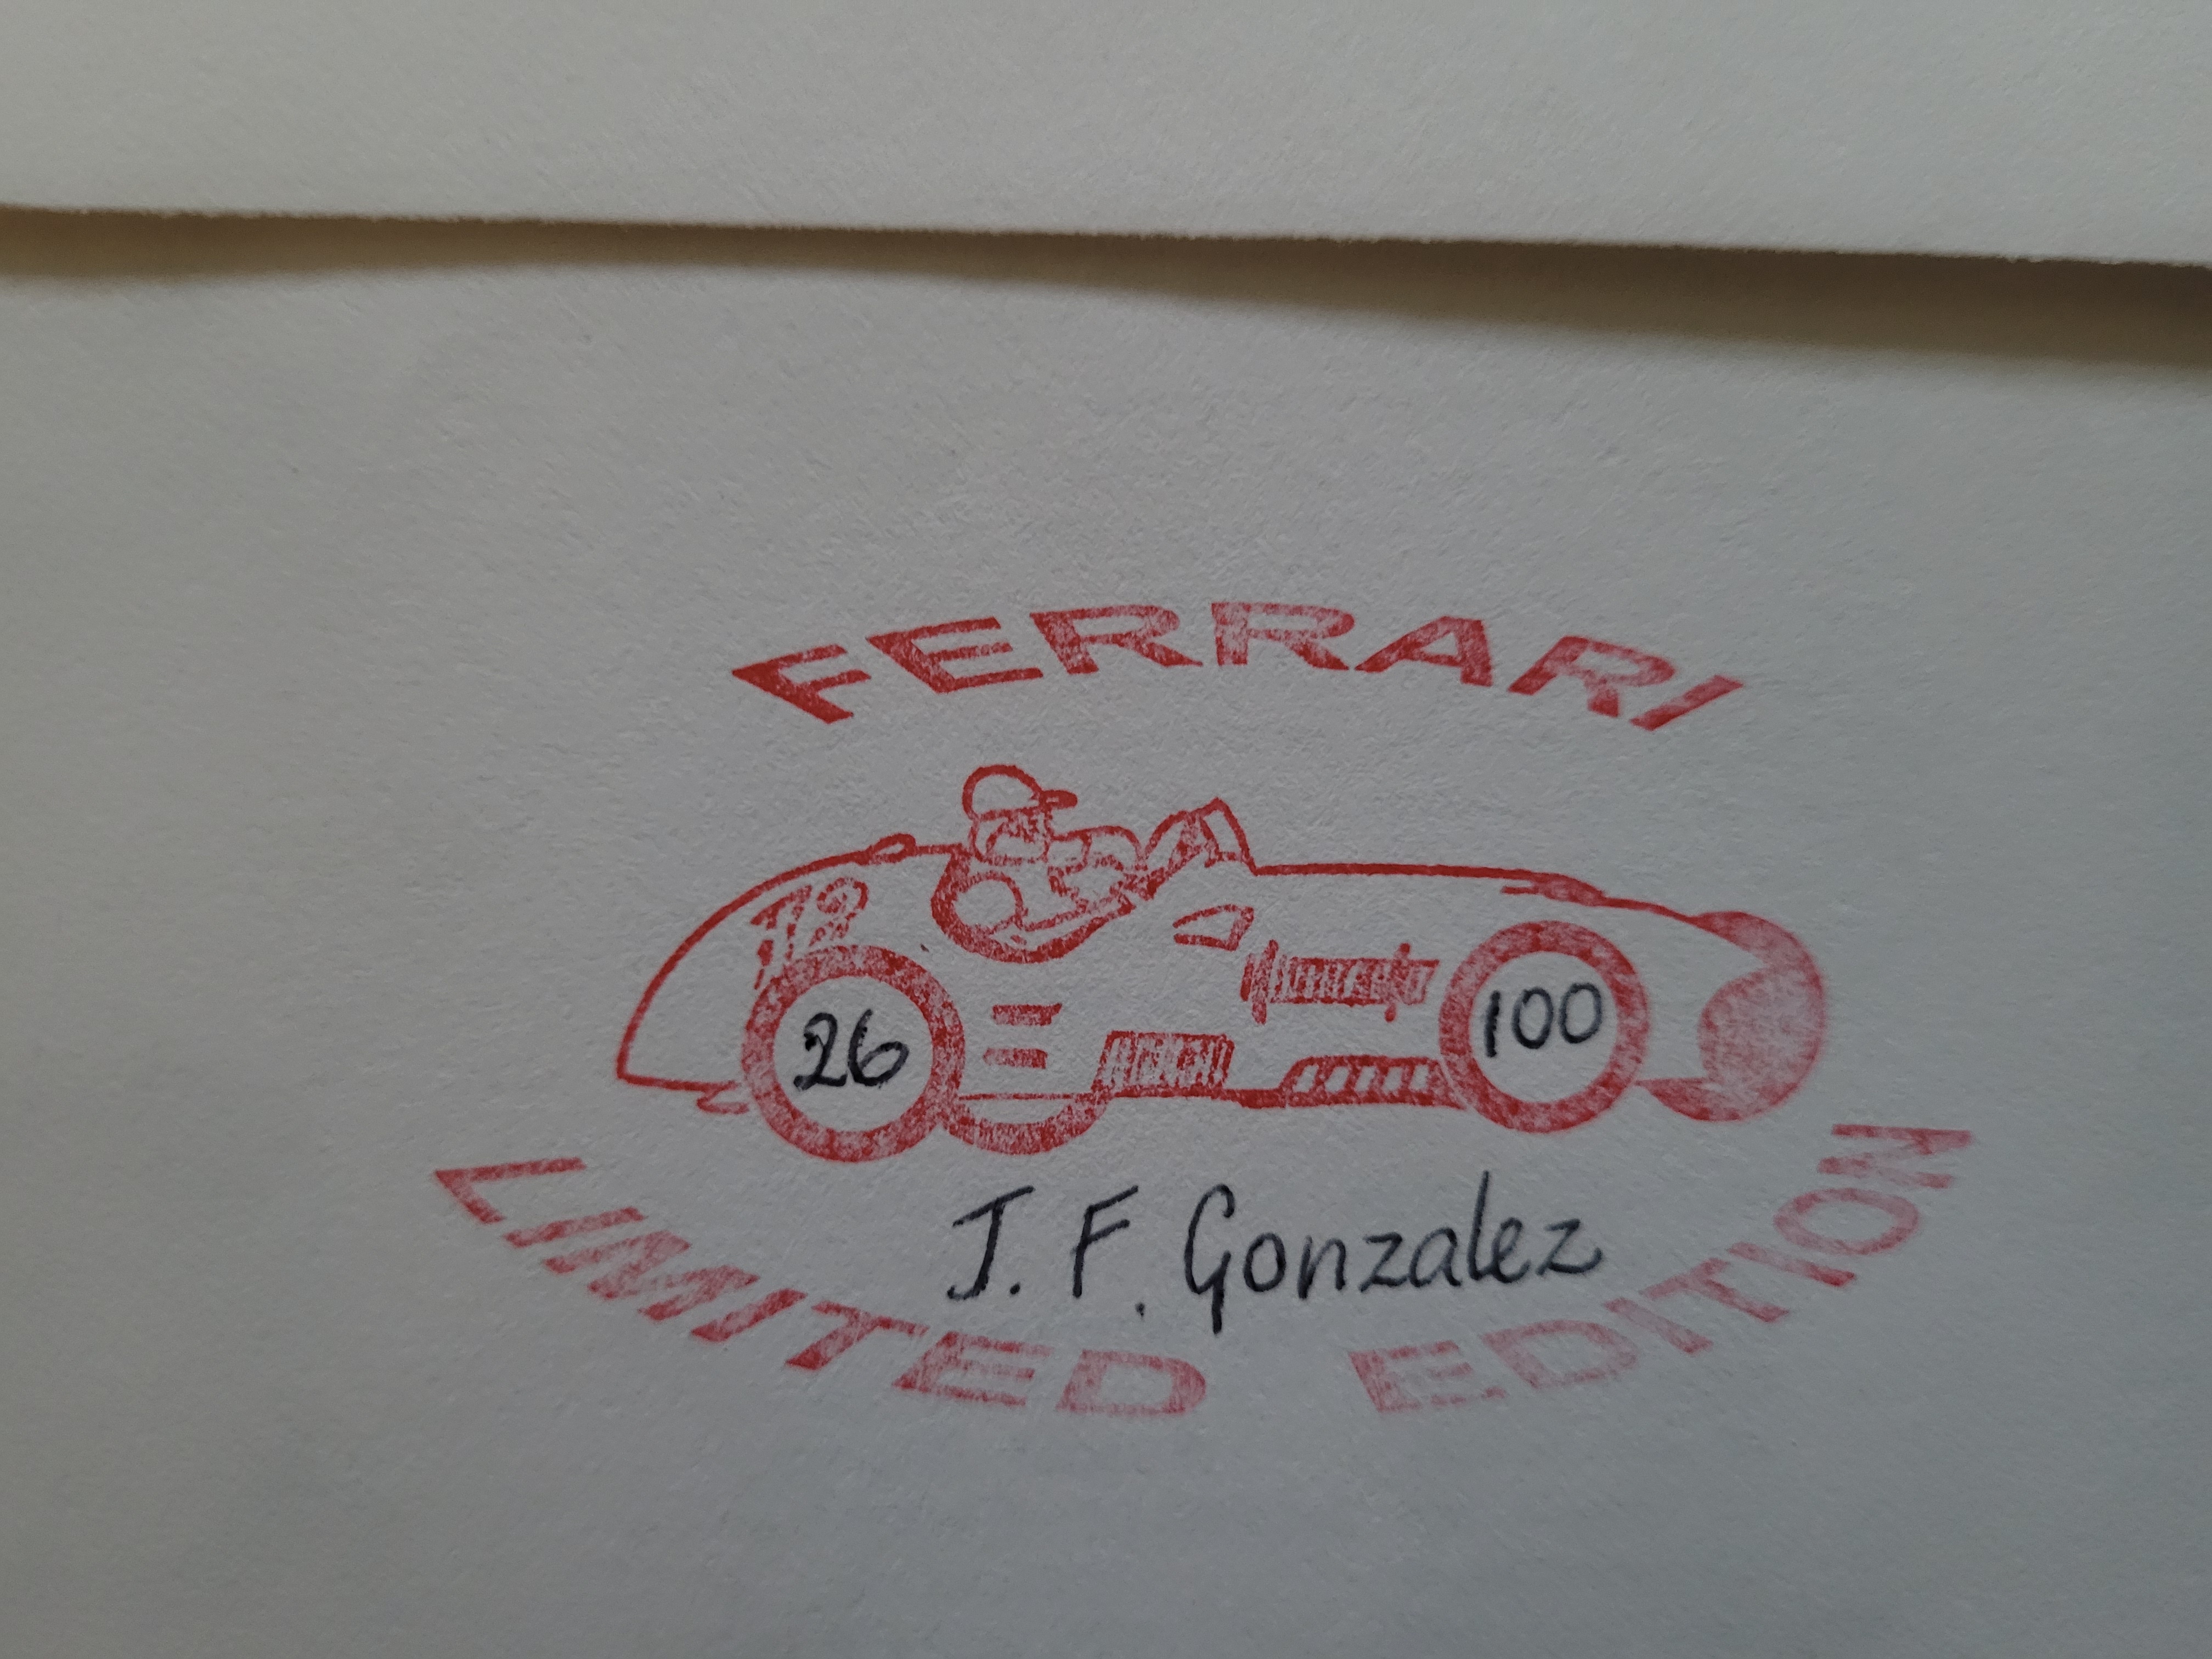 2001 FERRARI MOTOR RACING LTD EDITION POSTAL COVER AUTOGRAPHED BY JOSE GONZALEZ - Image 2 of 2